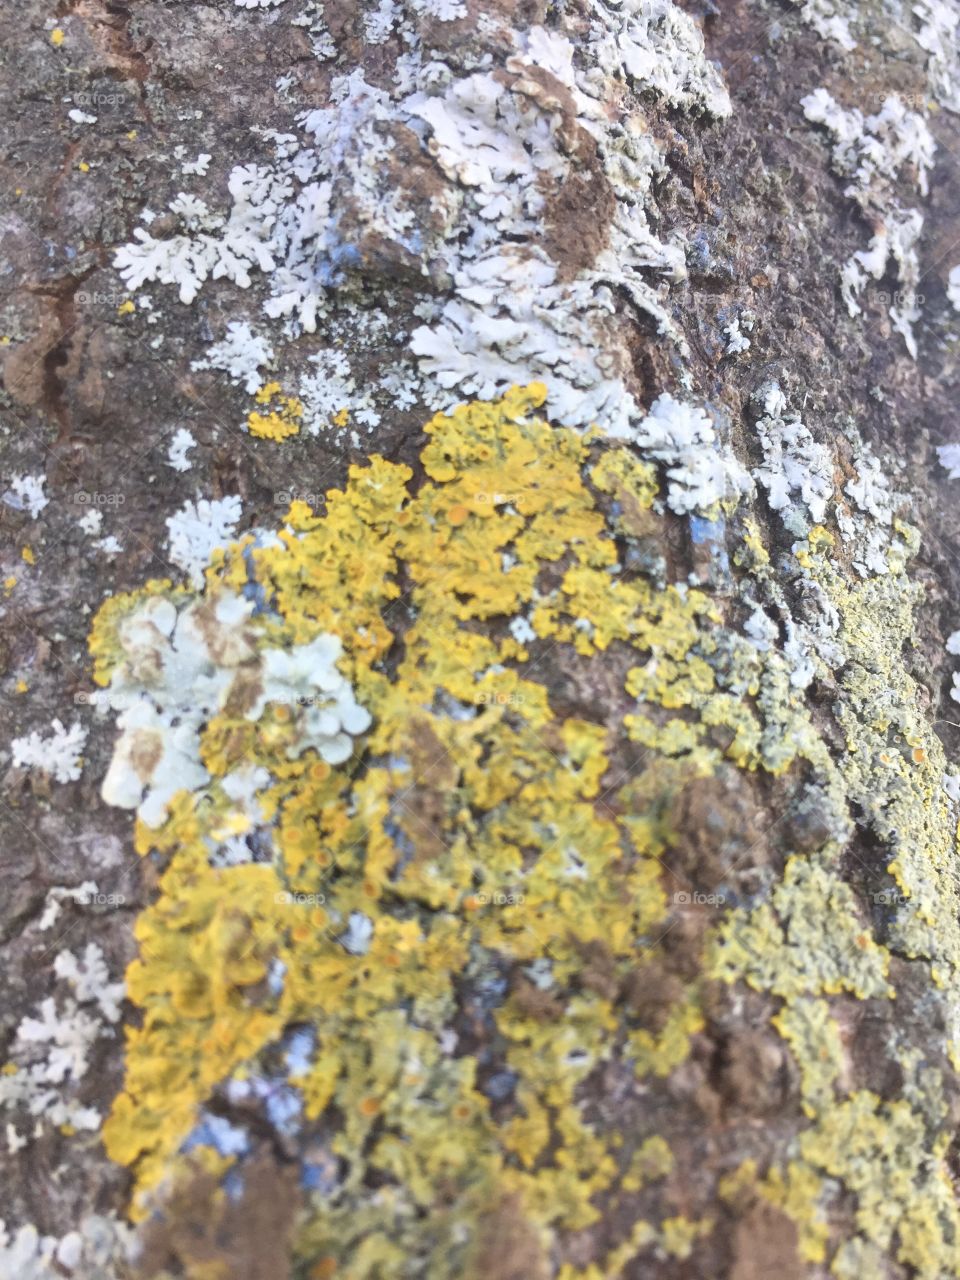 Macro view of lichen on tree bark